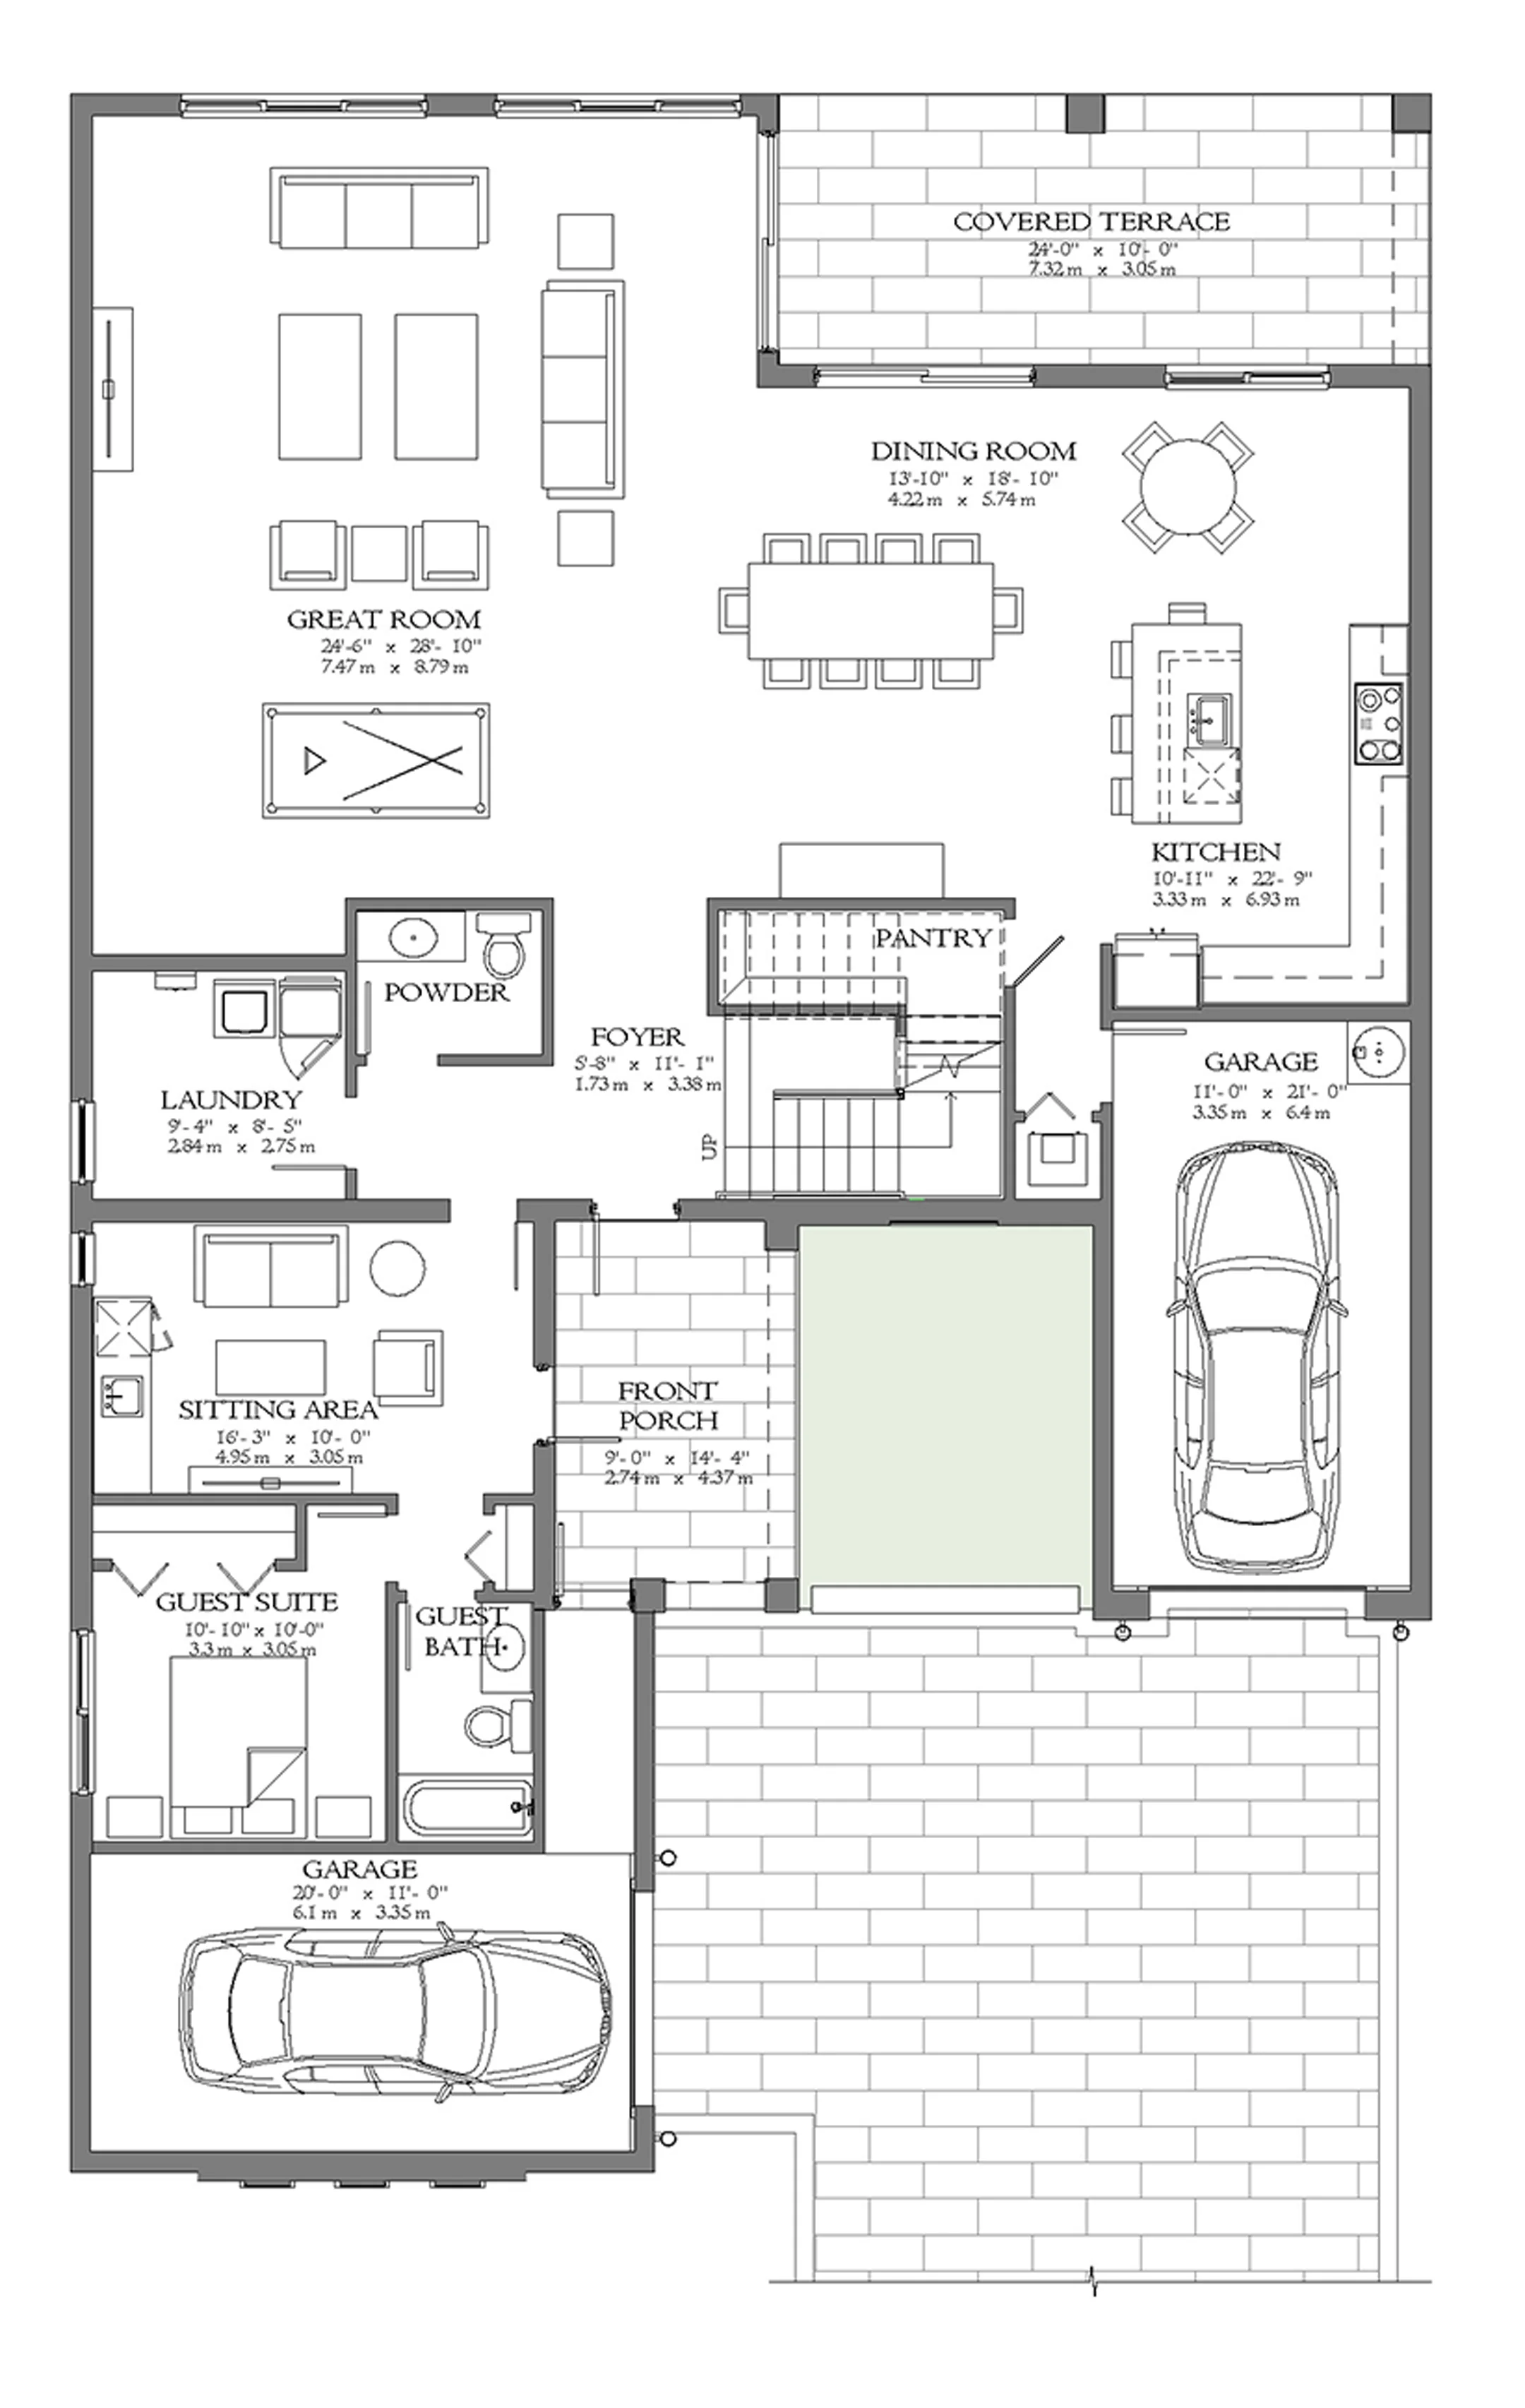 FLOOR PLAN, 2d Plan Create From Paper Drawing, Changes on 2d Plan, Adding  Furniture on 2d Plan, 2d Floorplan, Blueprint, House Plan - Etsy